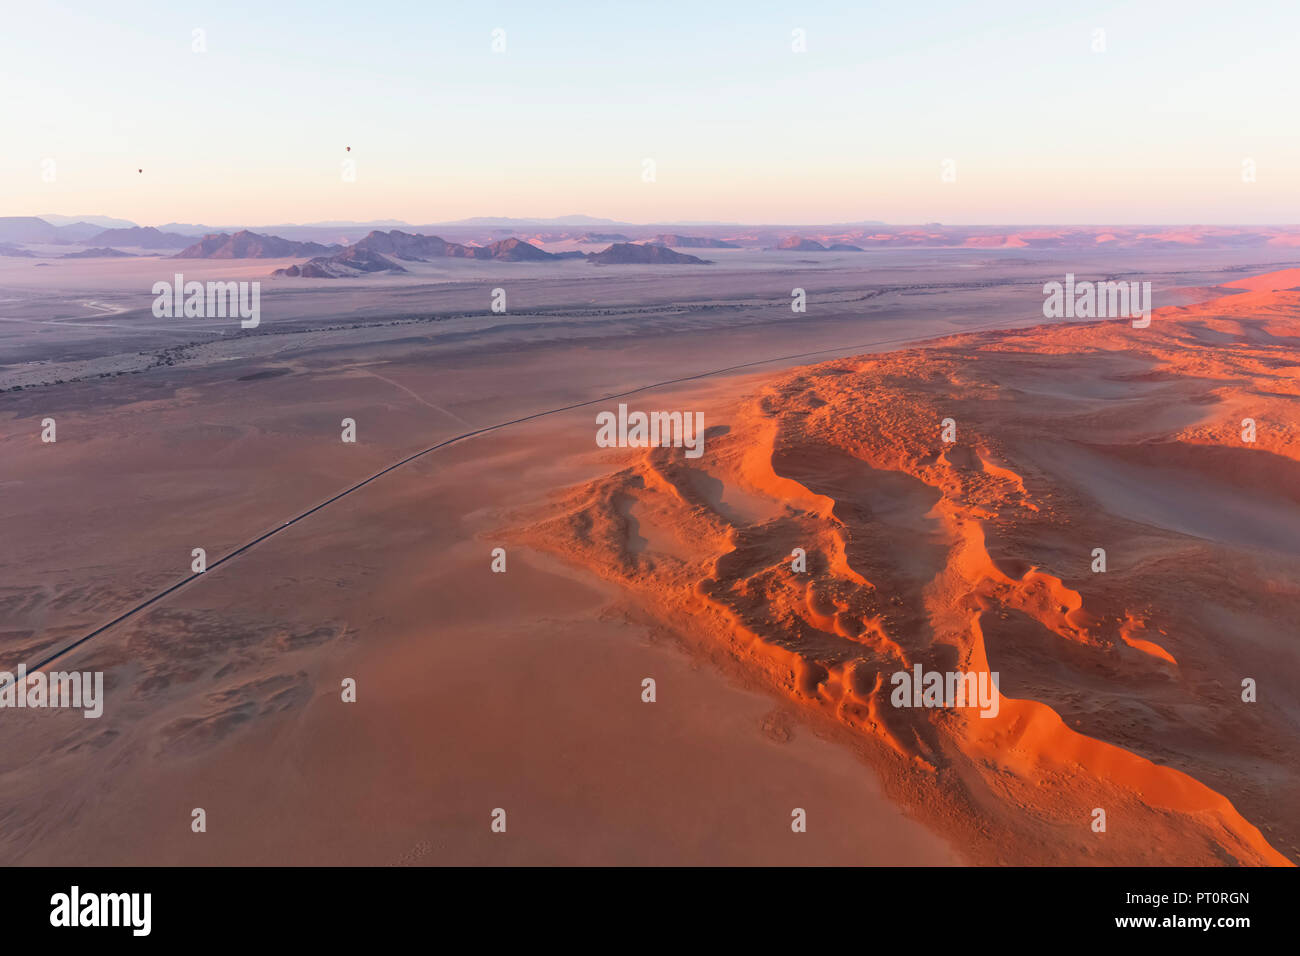 Africa, Namibia, Namib desert, Namib-Naukluft National Park, Aerial view of desert dunes, air balloons Stock Photo